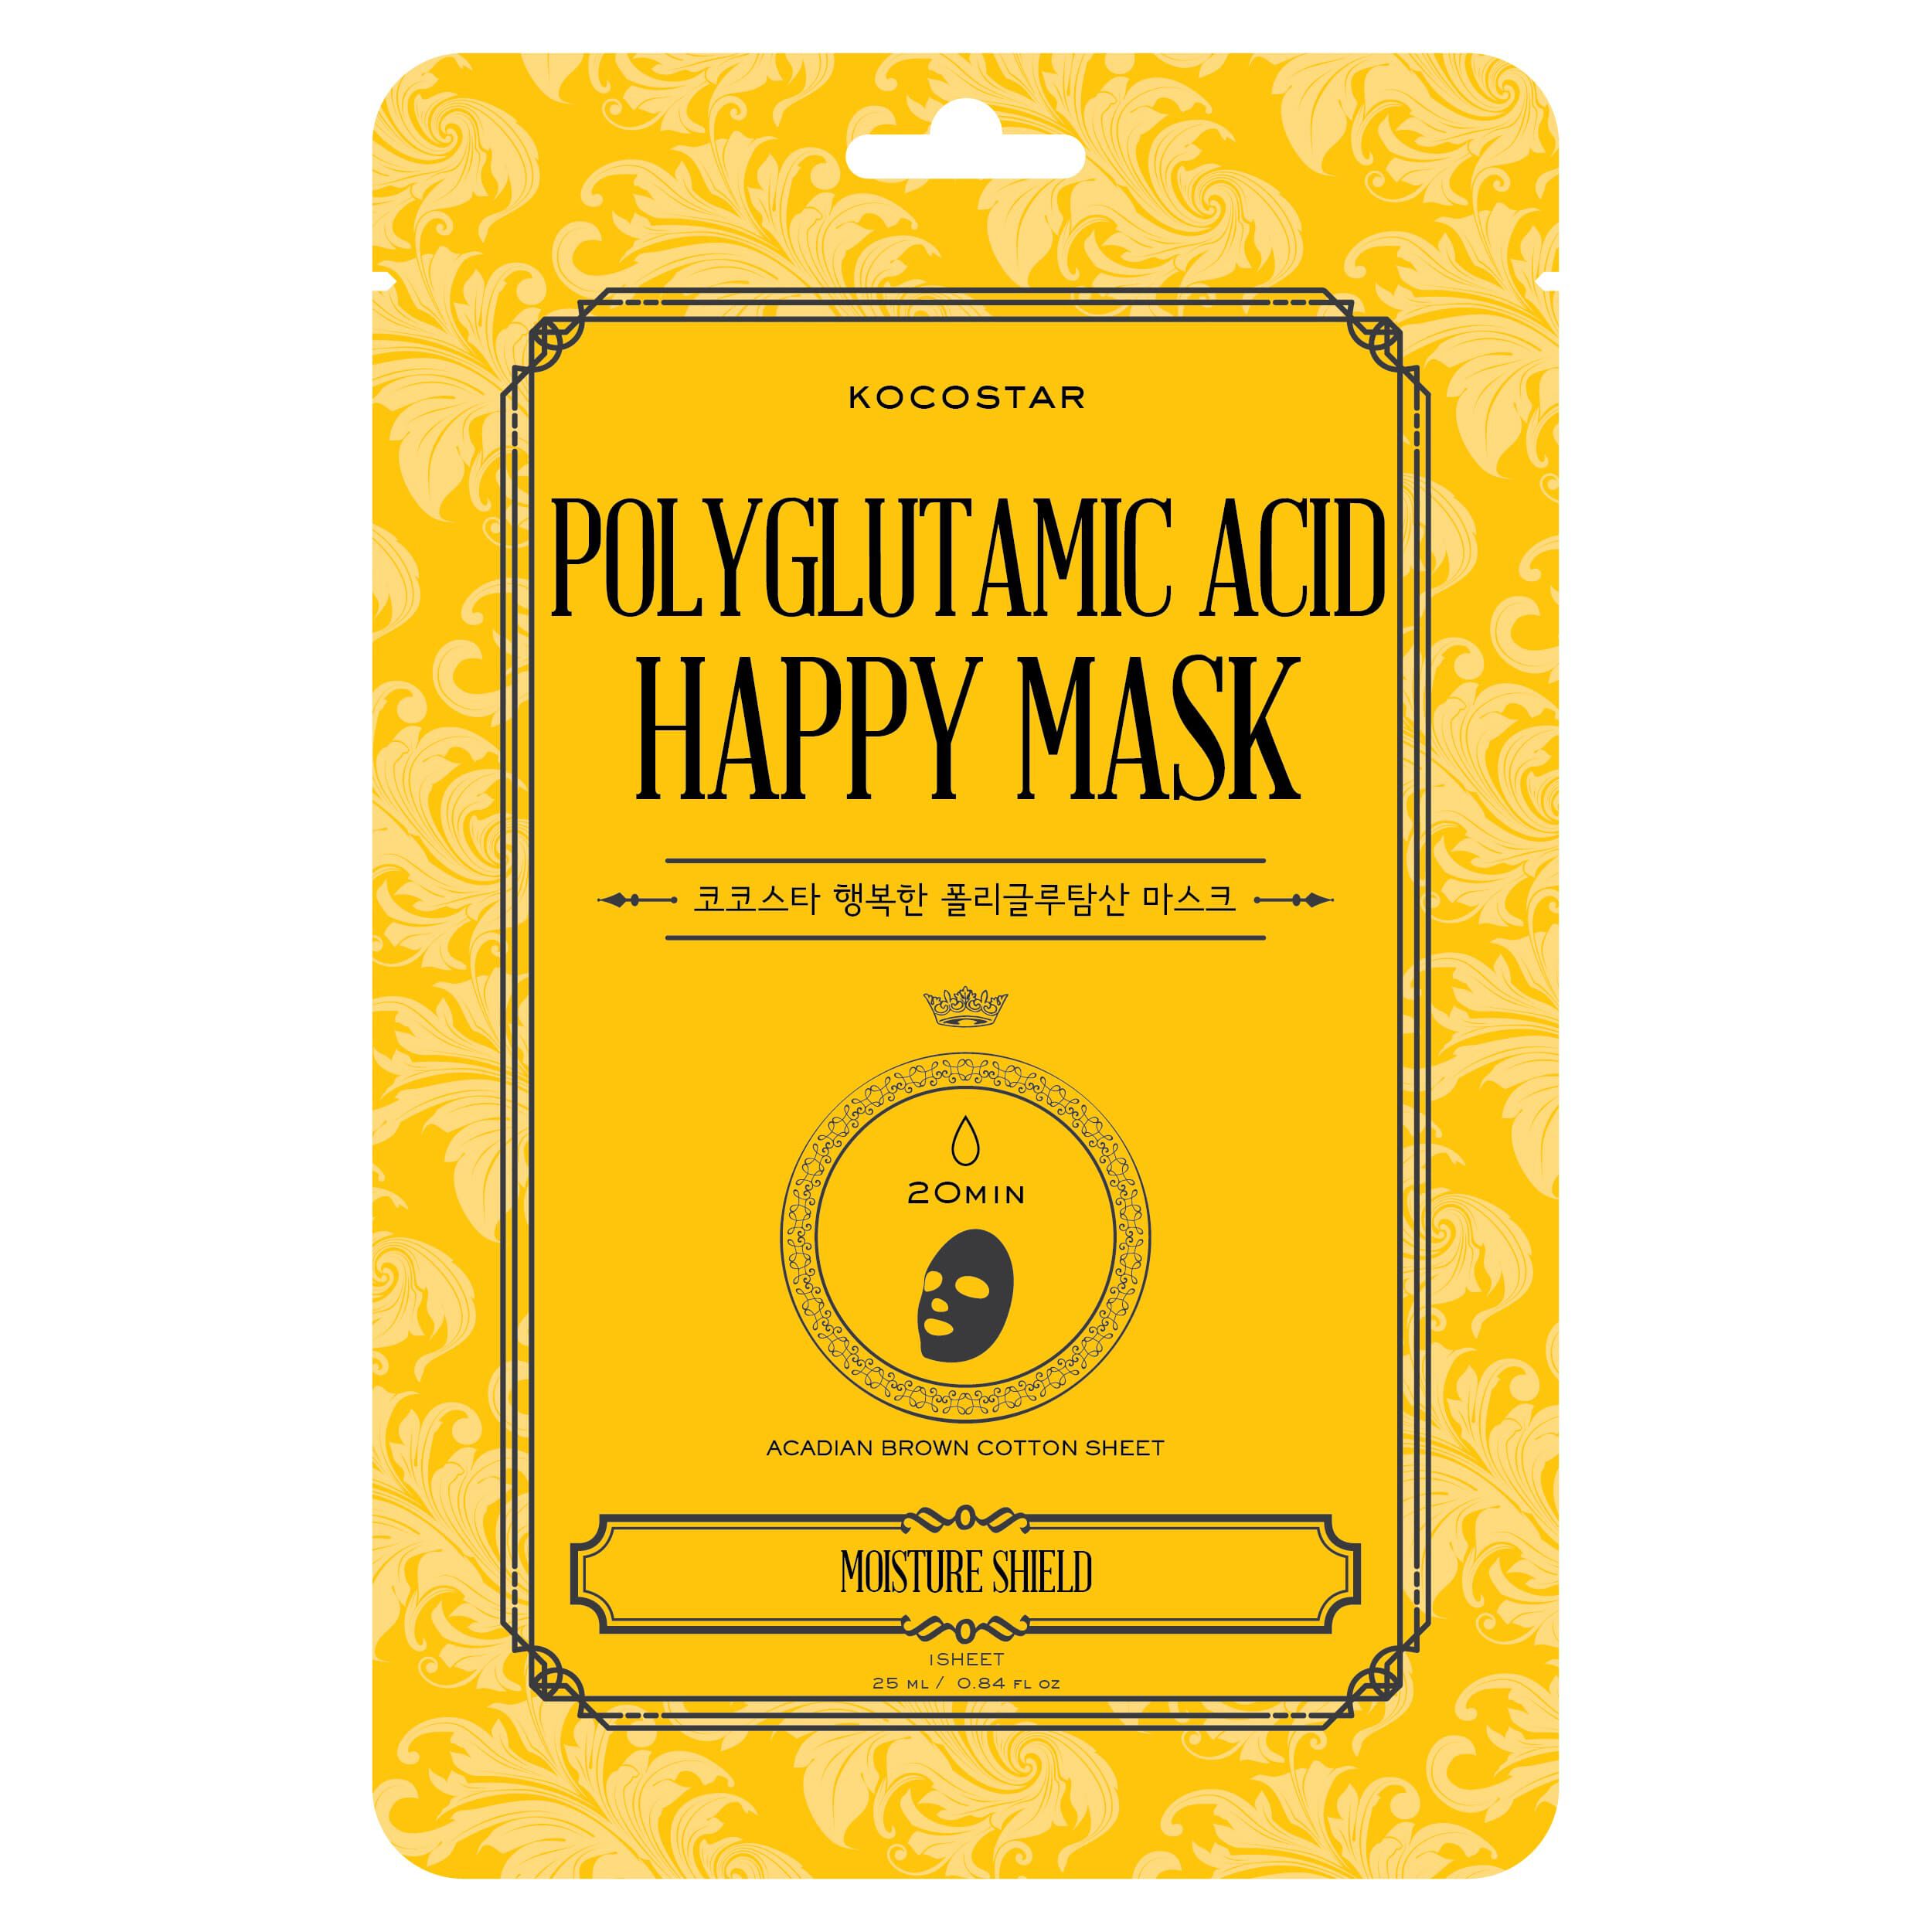 Маска для лица Kocostar Polyglutamic Acid Happy Mask, 25 мл ультра увлажняющая маска для сухой кожи h2overdose mask foreo 6 шт х 6 г